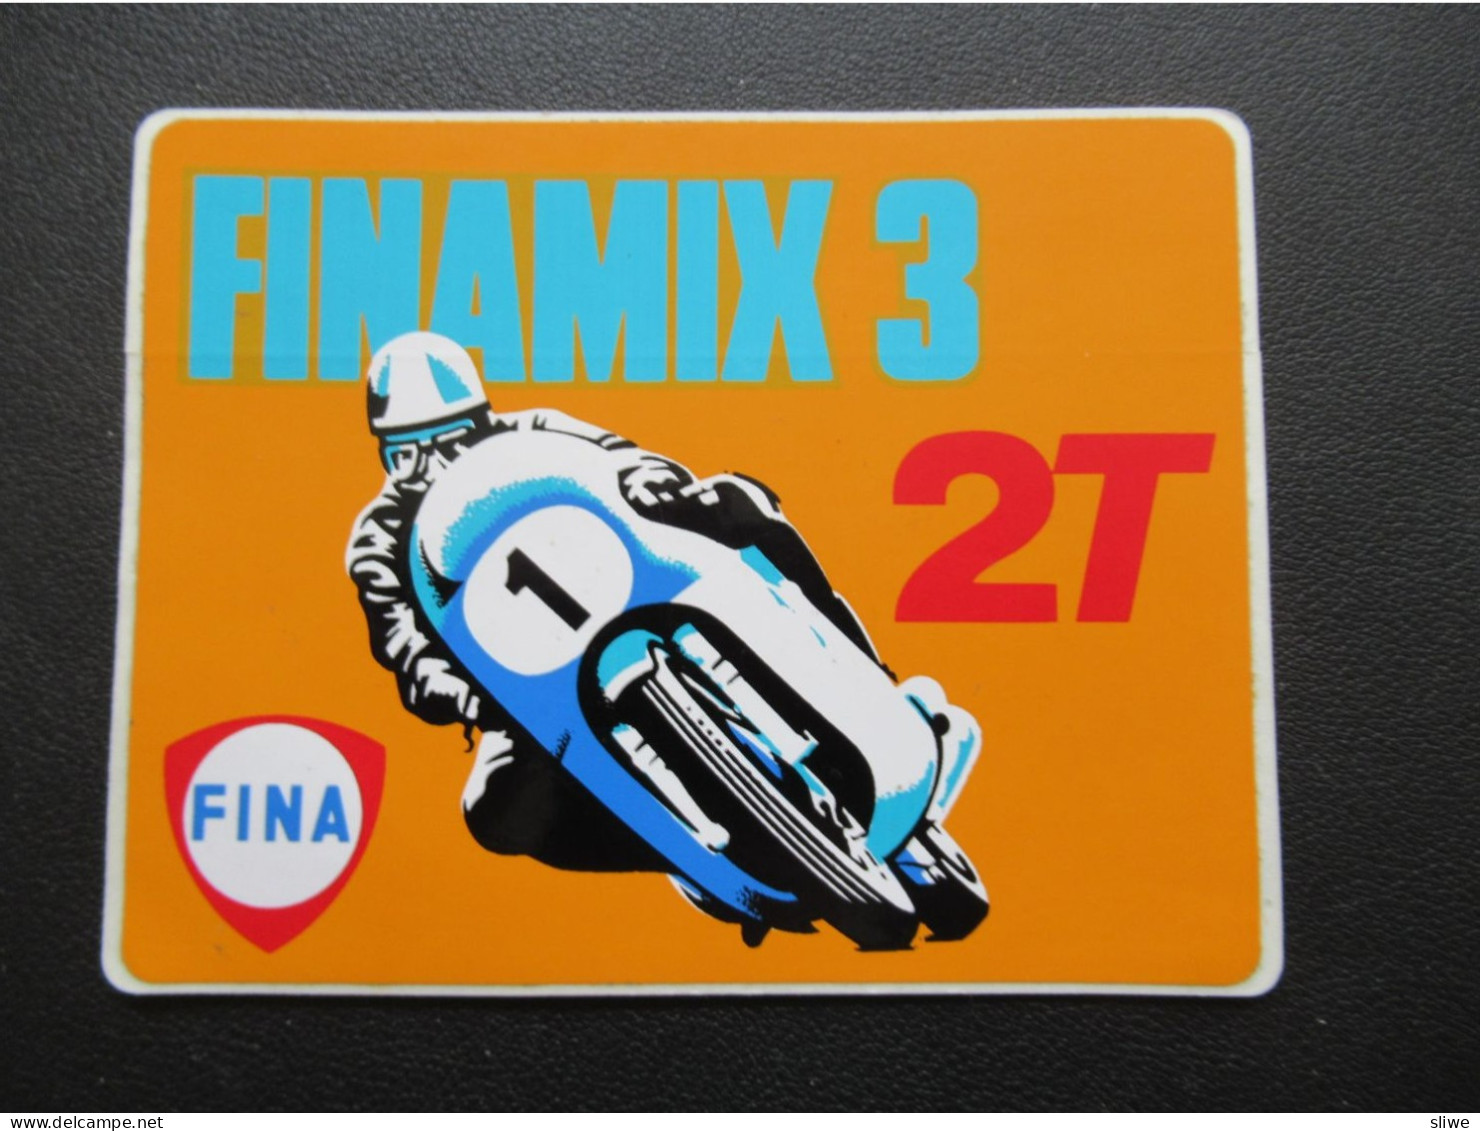 Sticker Finamix 3 - 2T - Adesivi